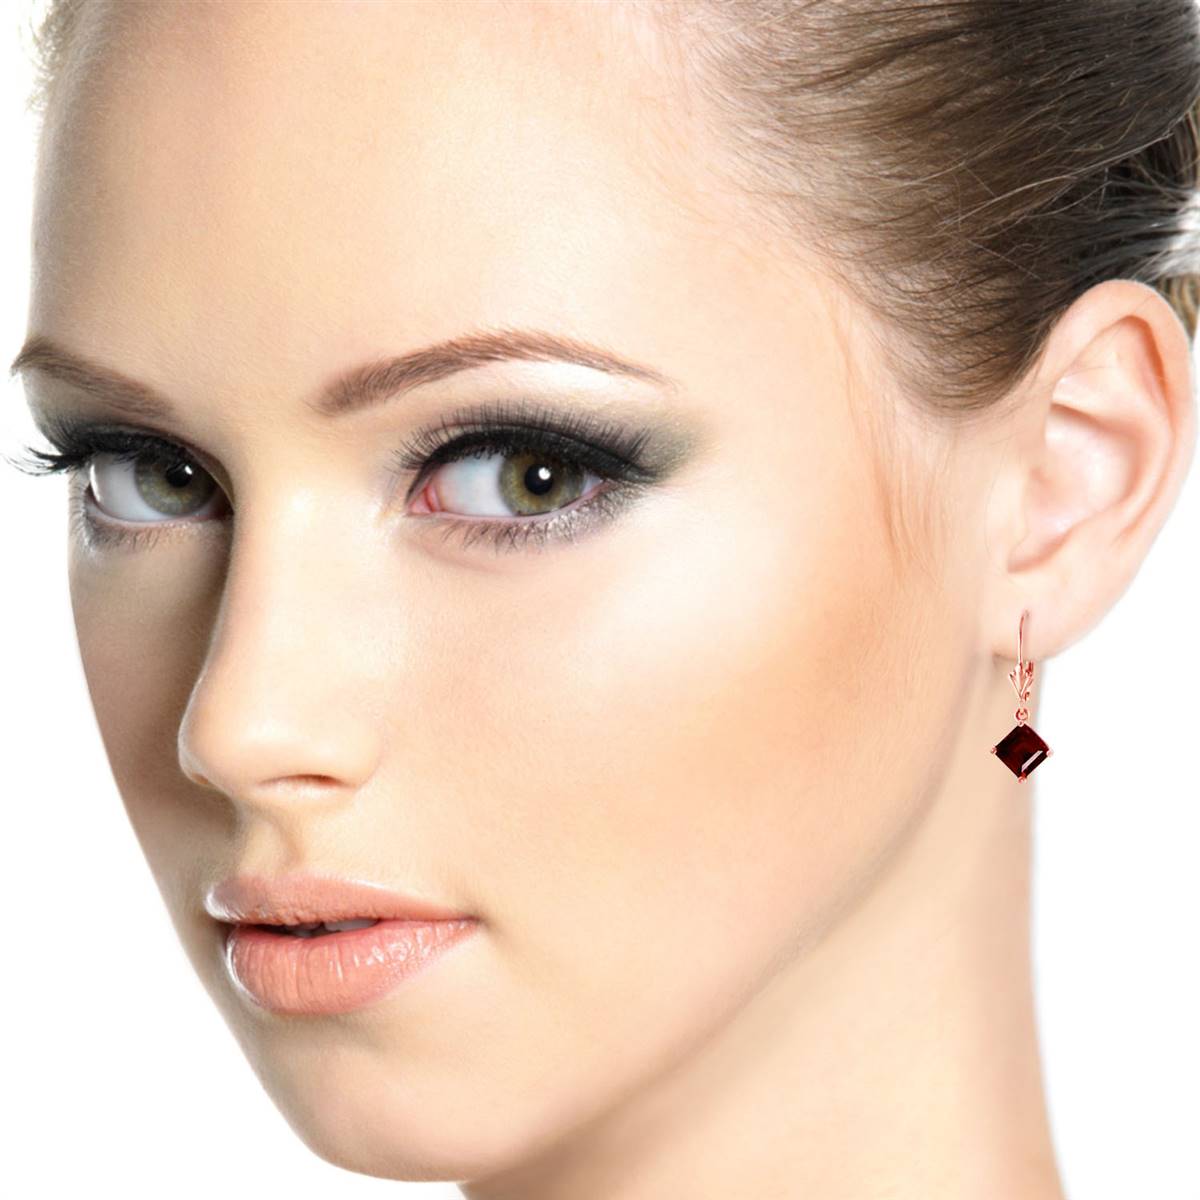 3.2 Carat 14K Solid Rose Gold Garnet Simplicity Earrings